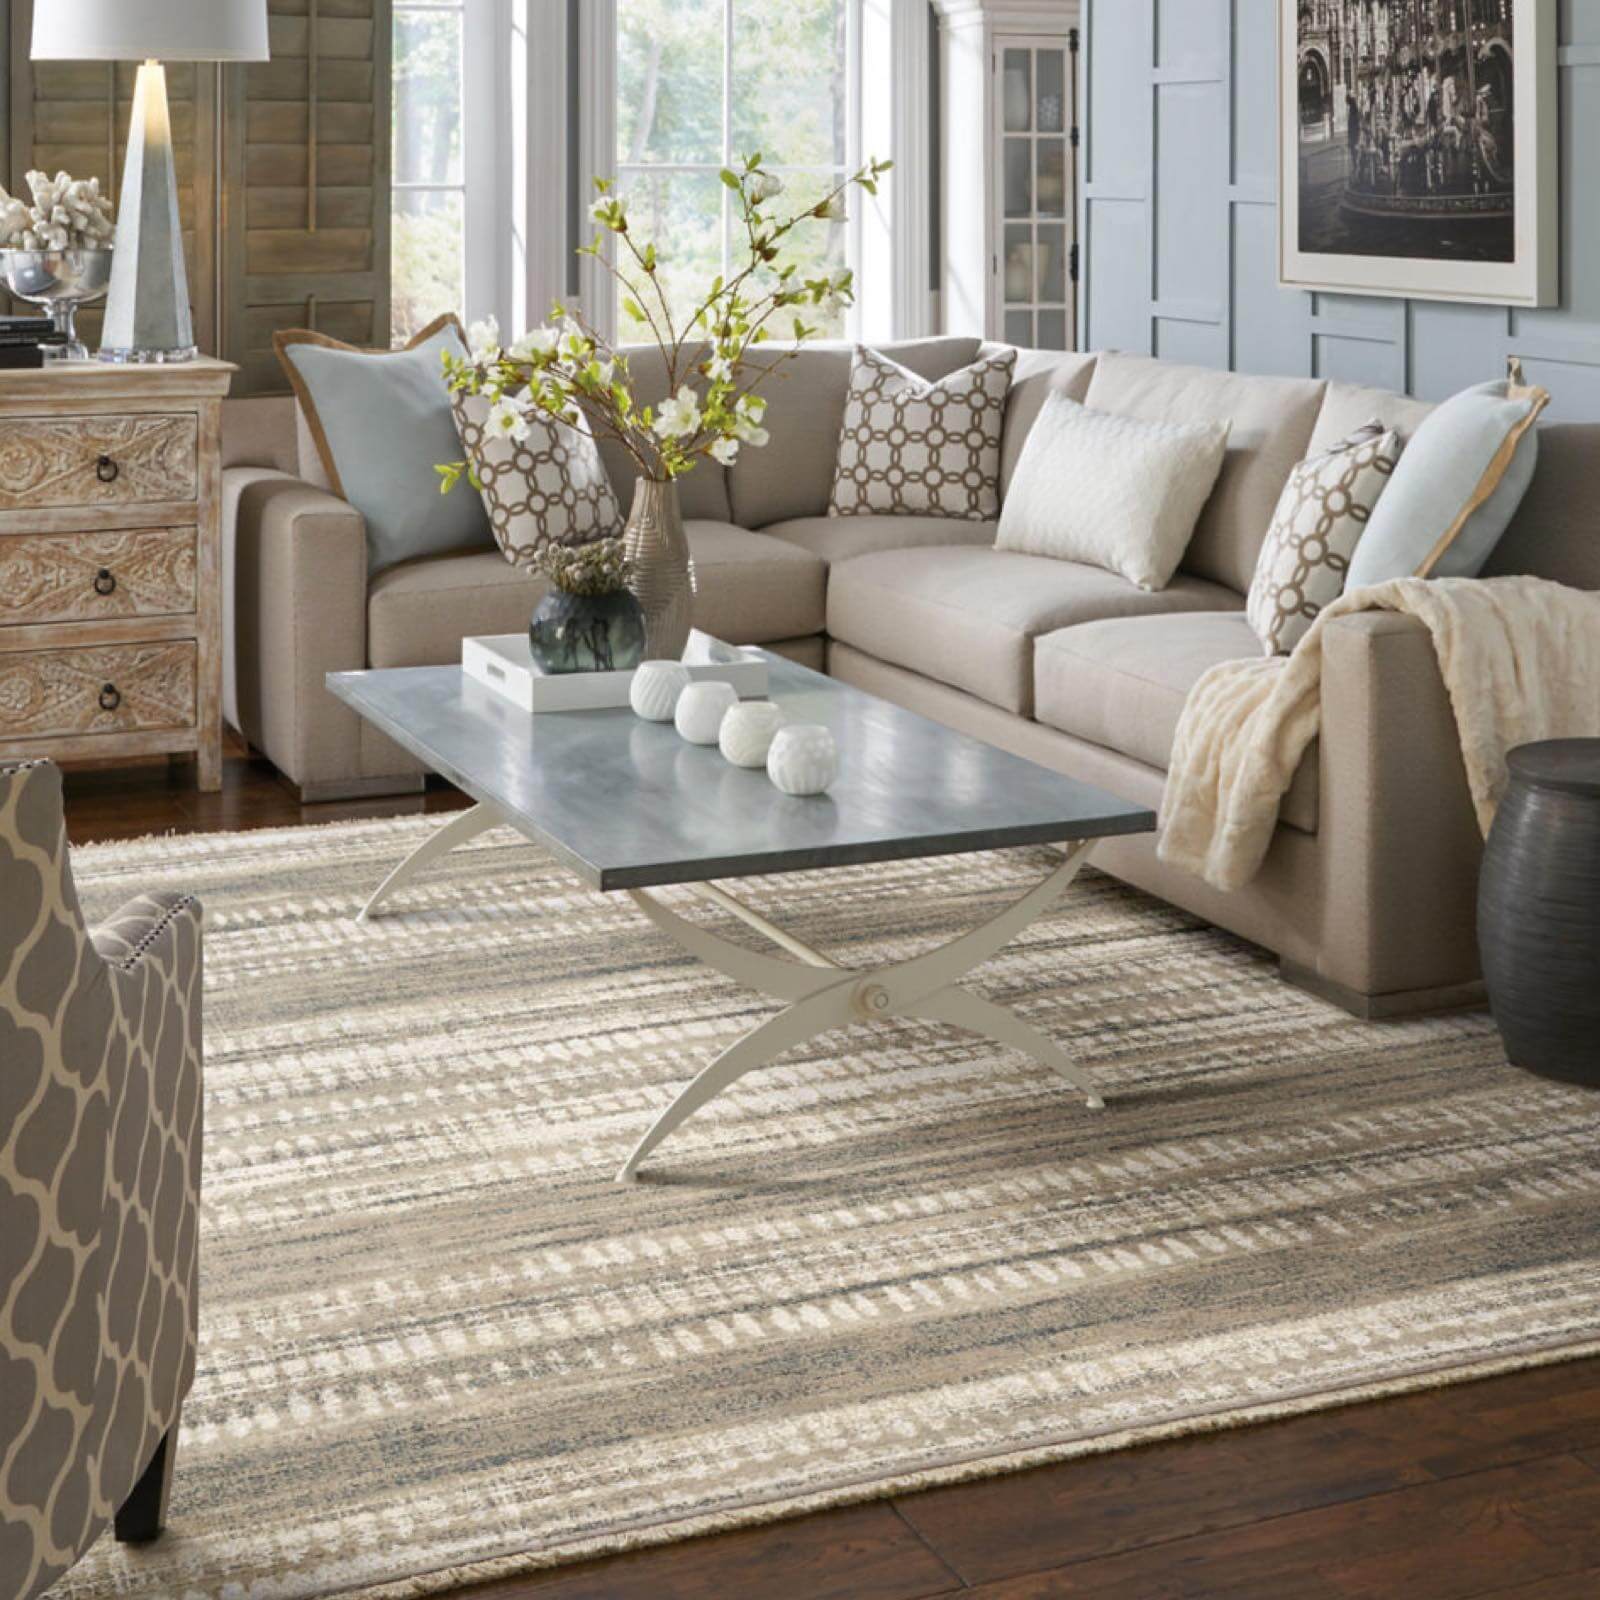 Area rug for living room | Jimmie Lyles Flooring Gallery